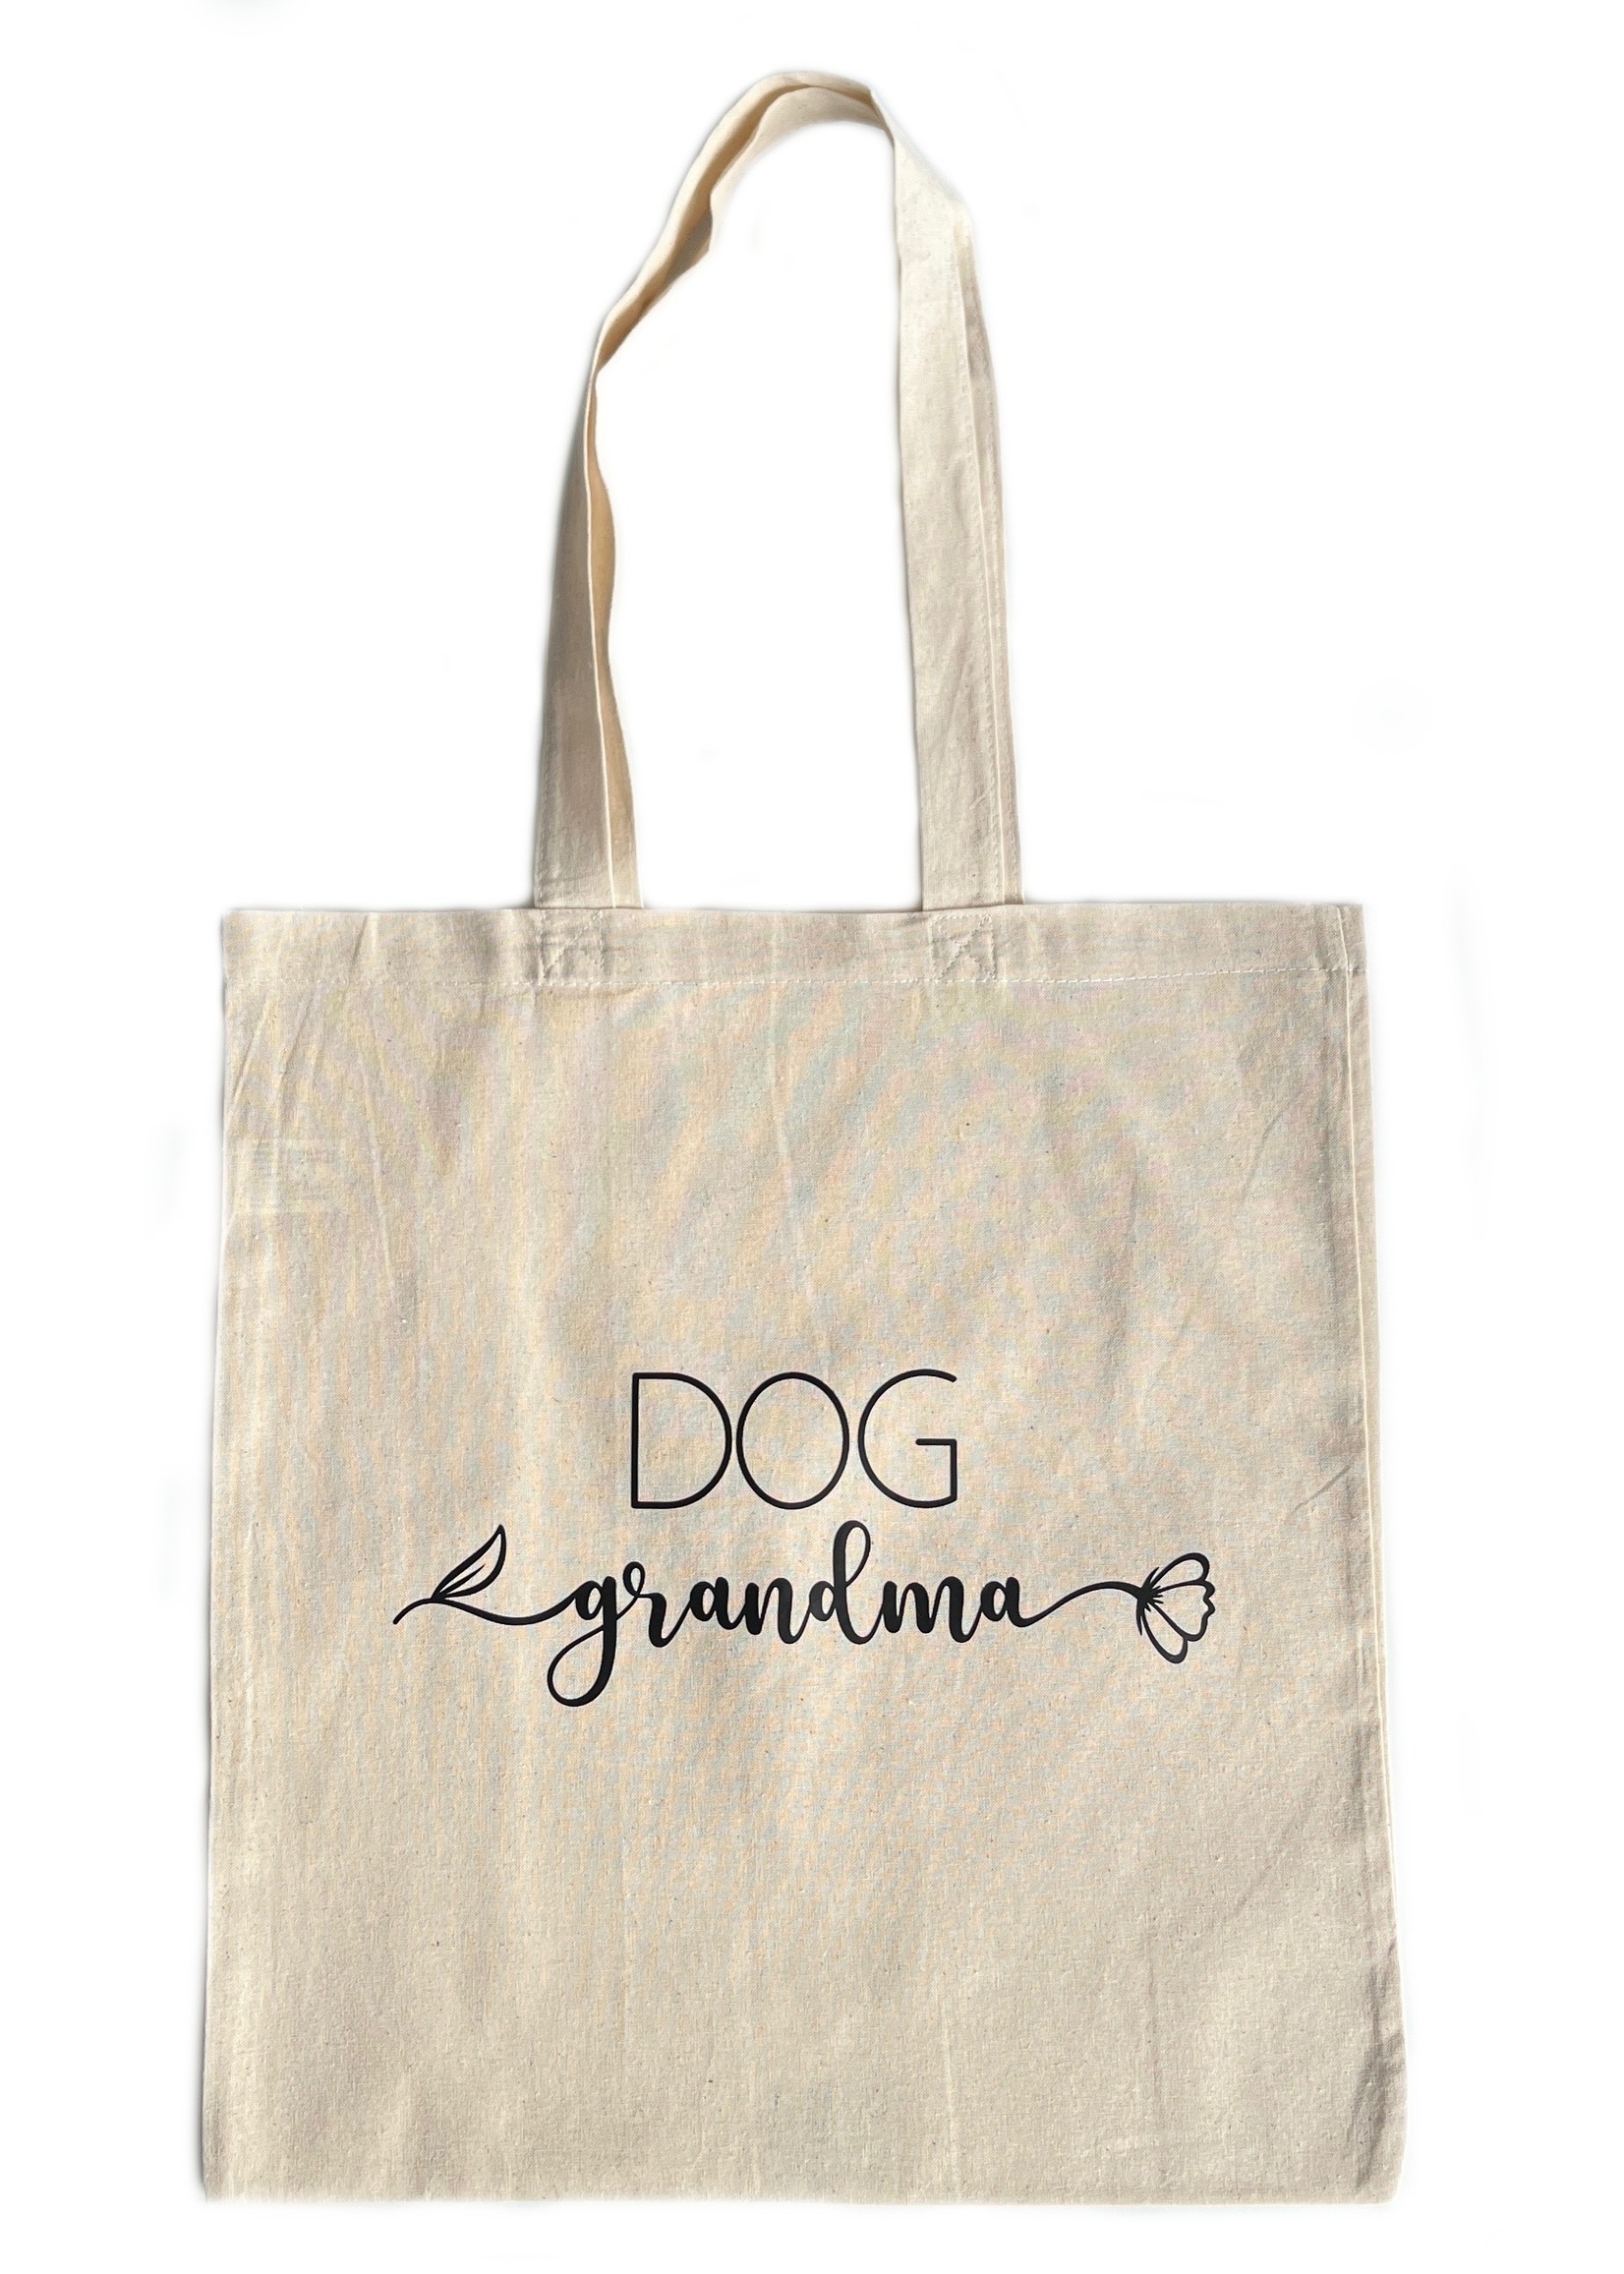 Dog grandma  bag